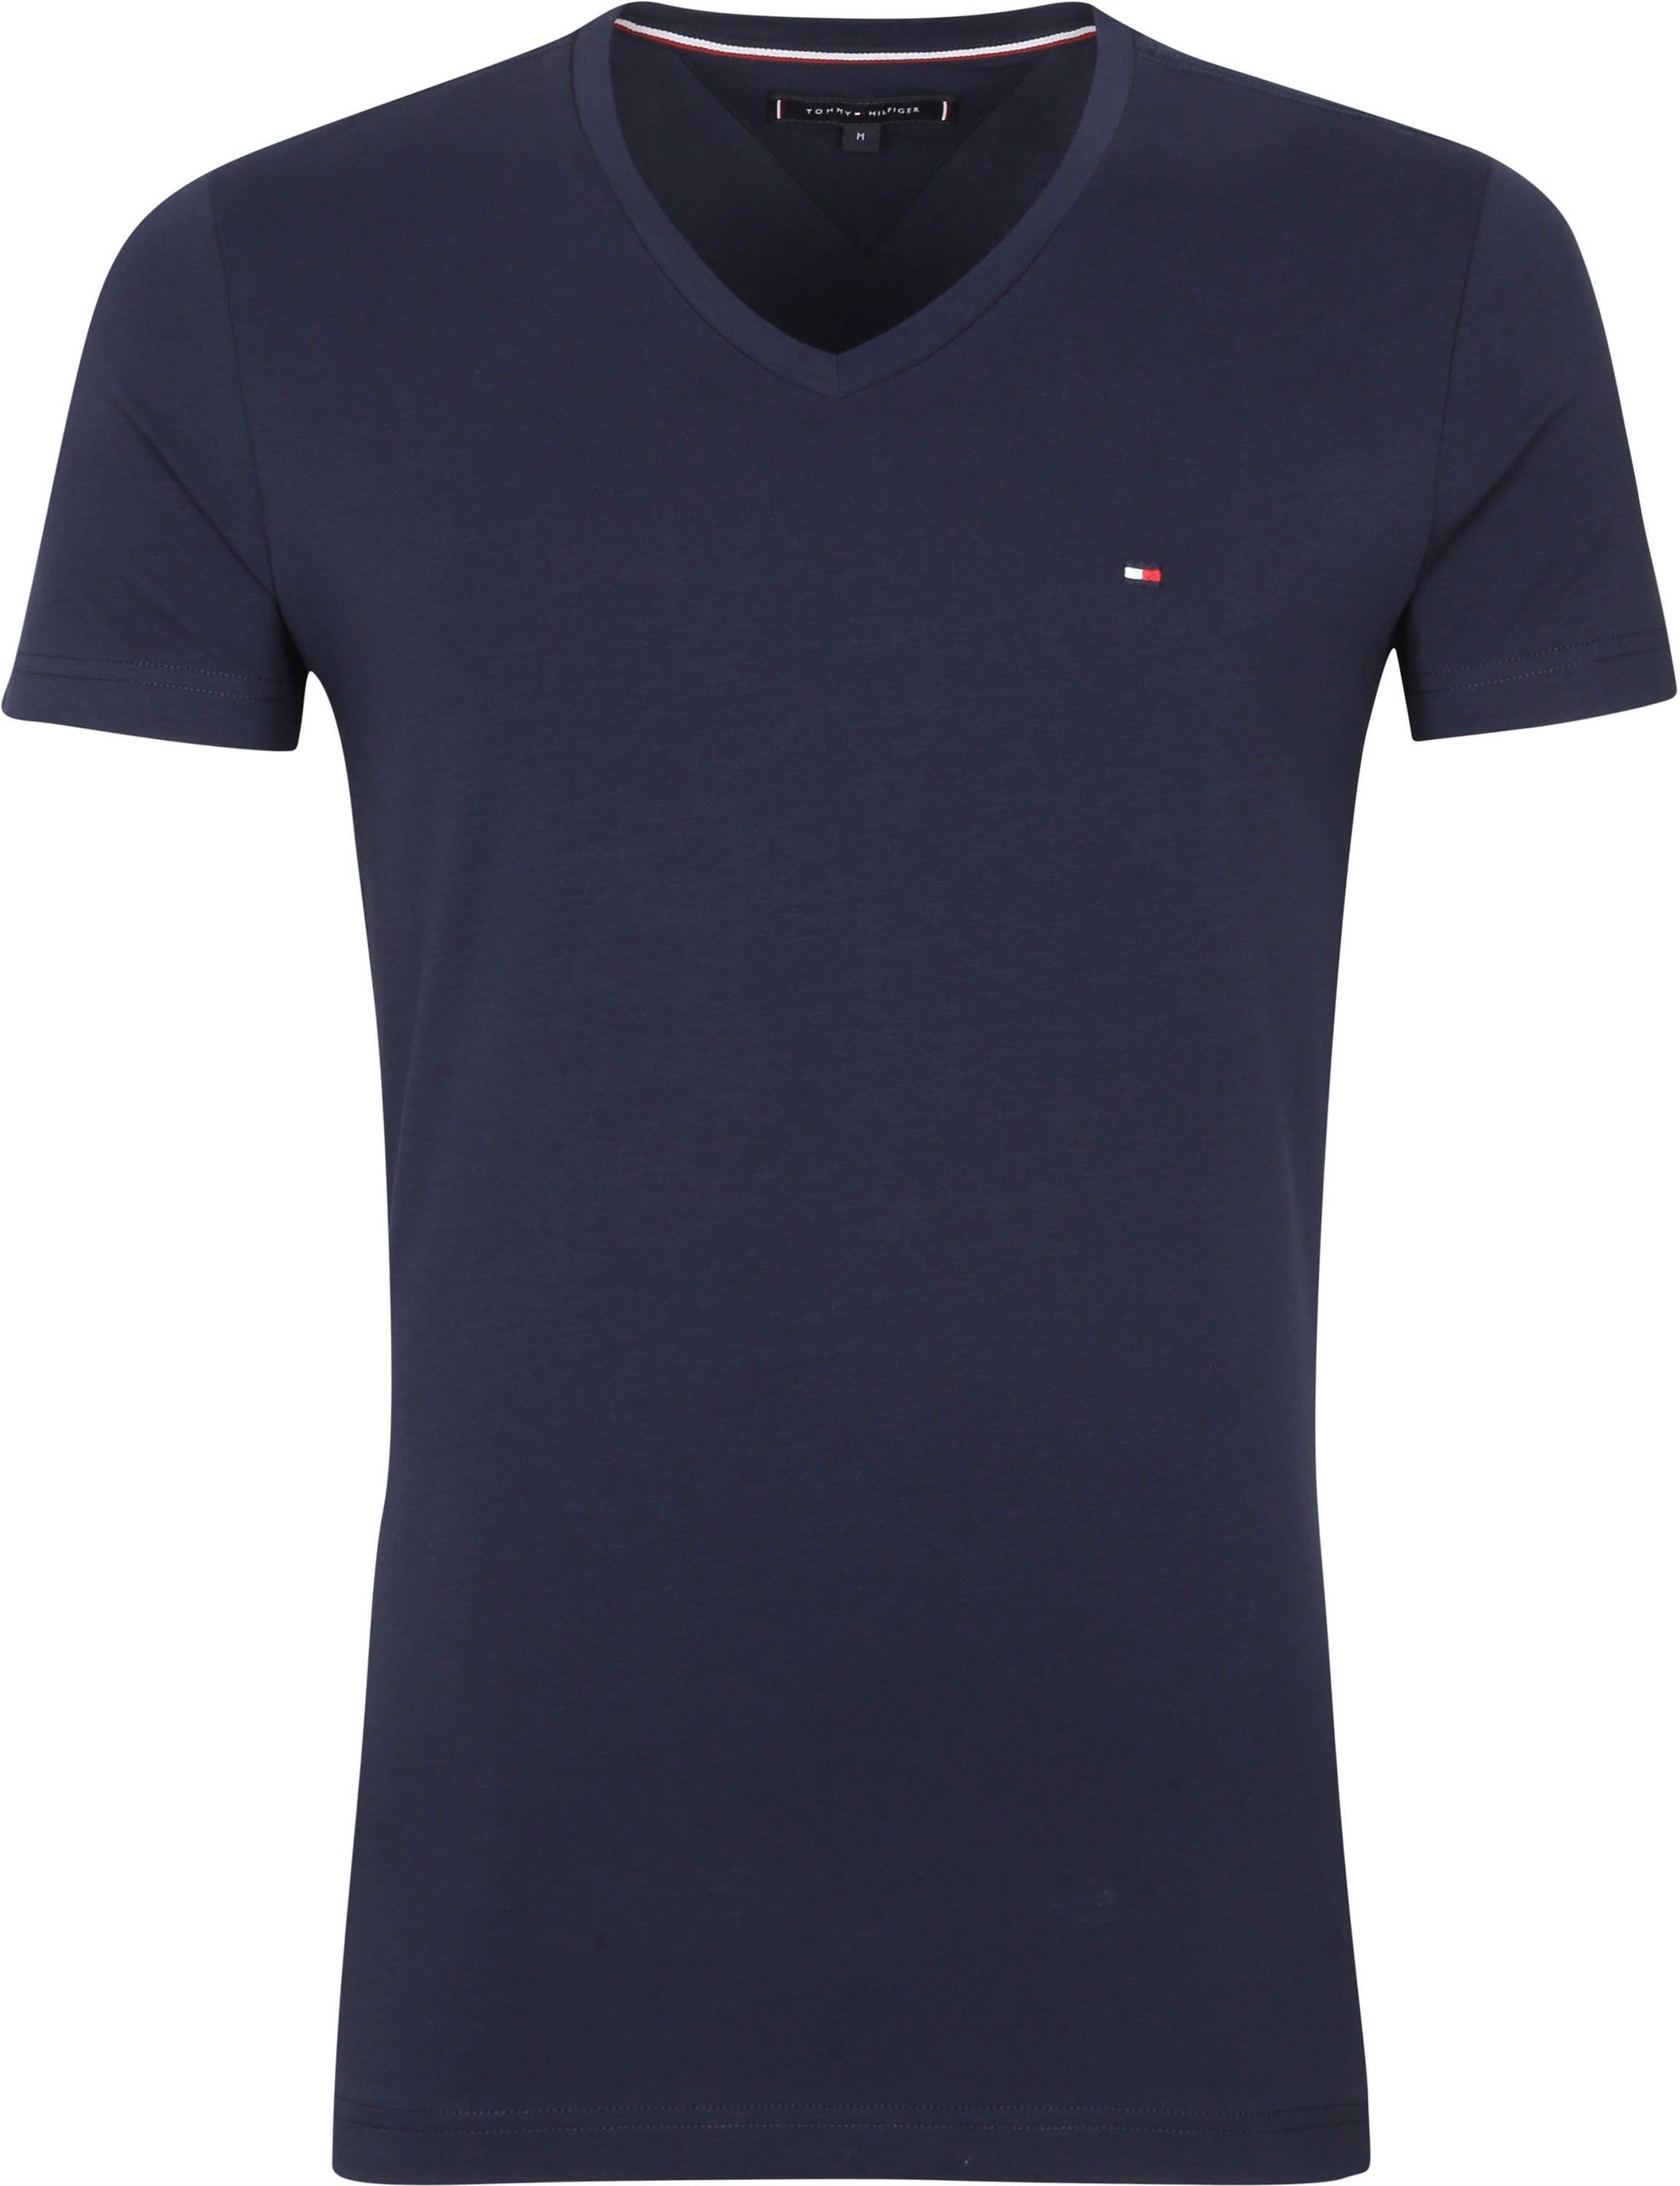 Tommy Hilfiger T Shirt V-Neck Navy Dark Blue Blue size S